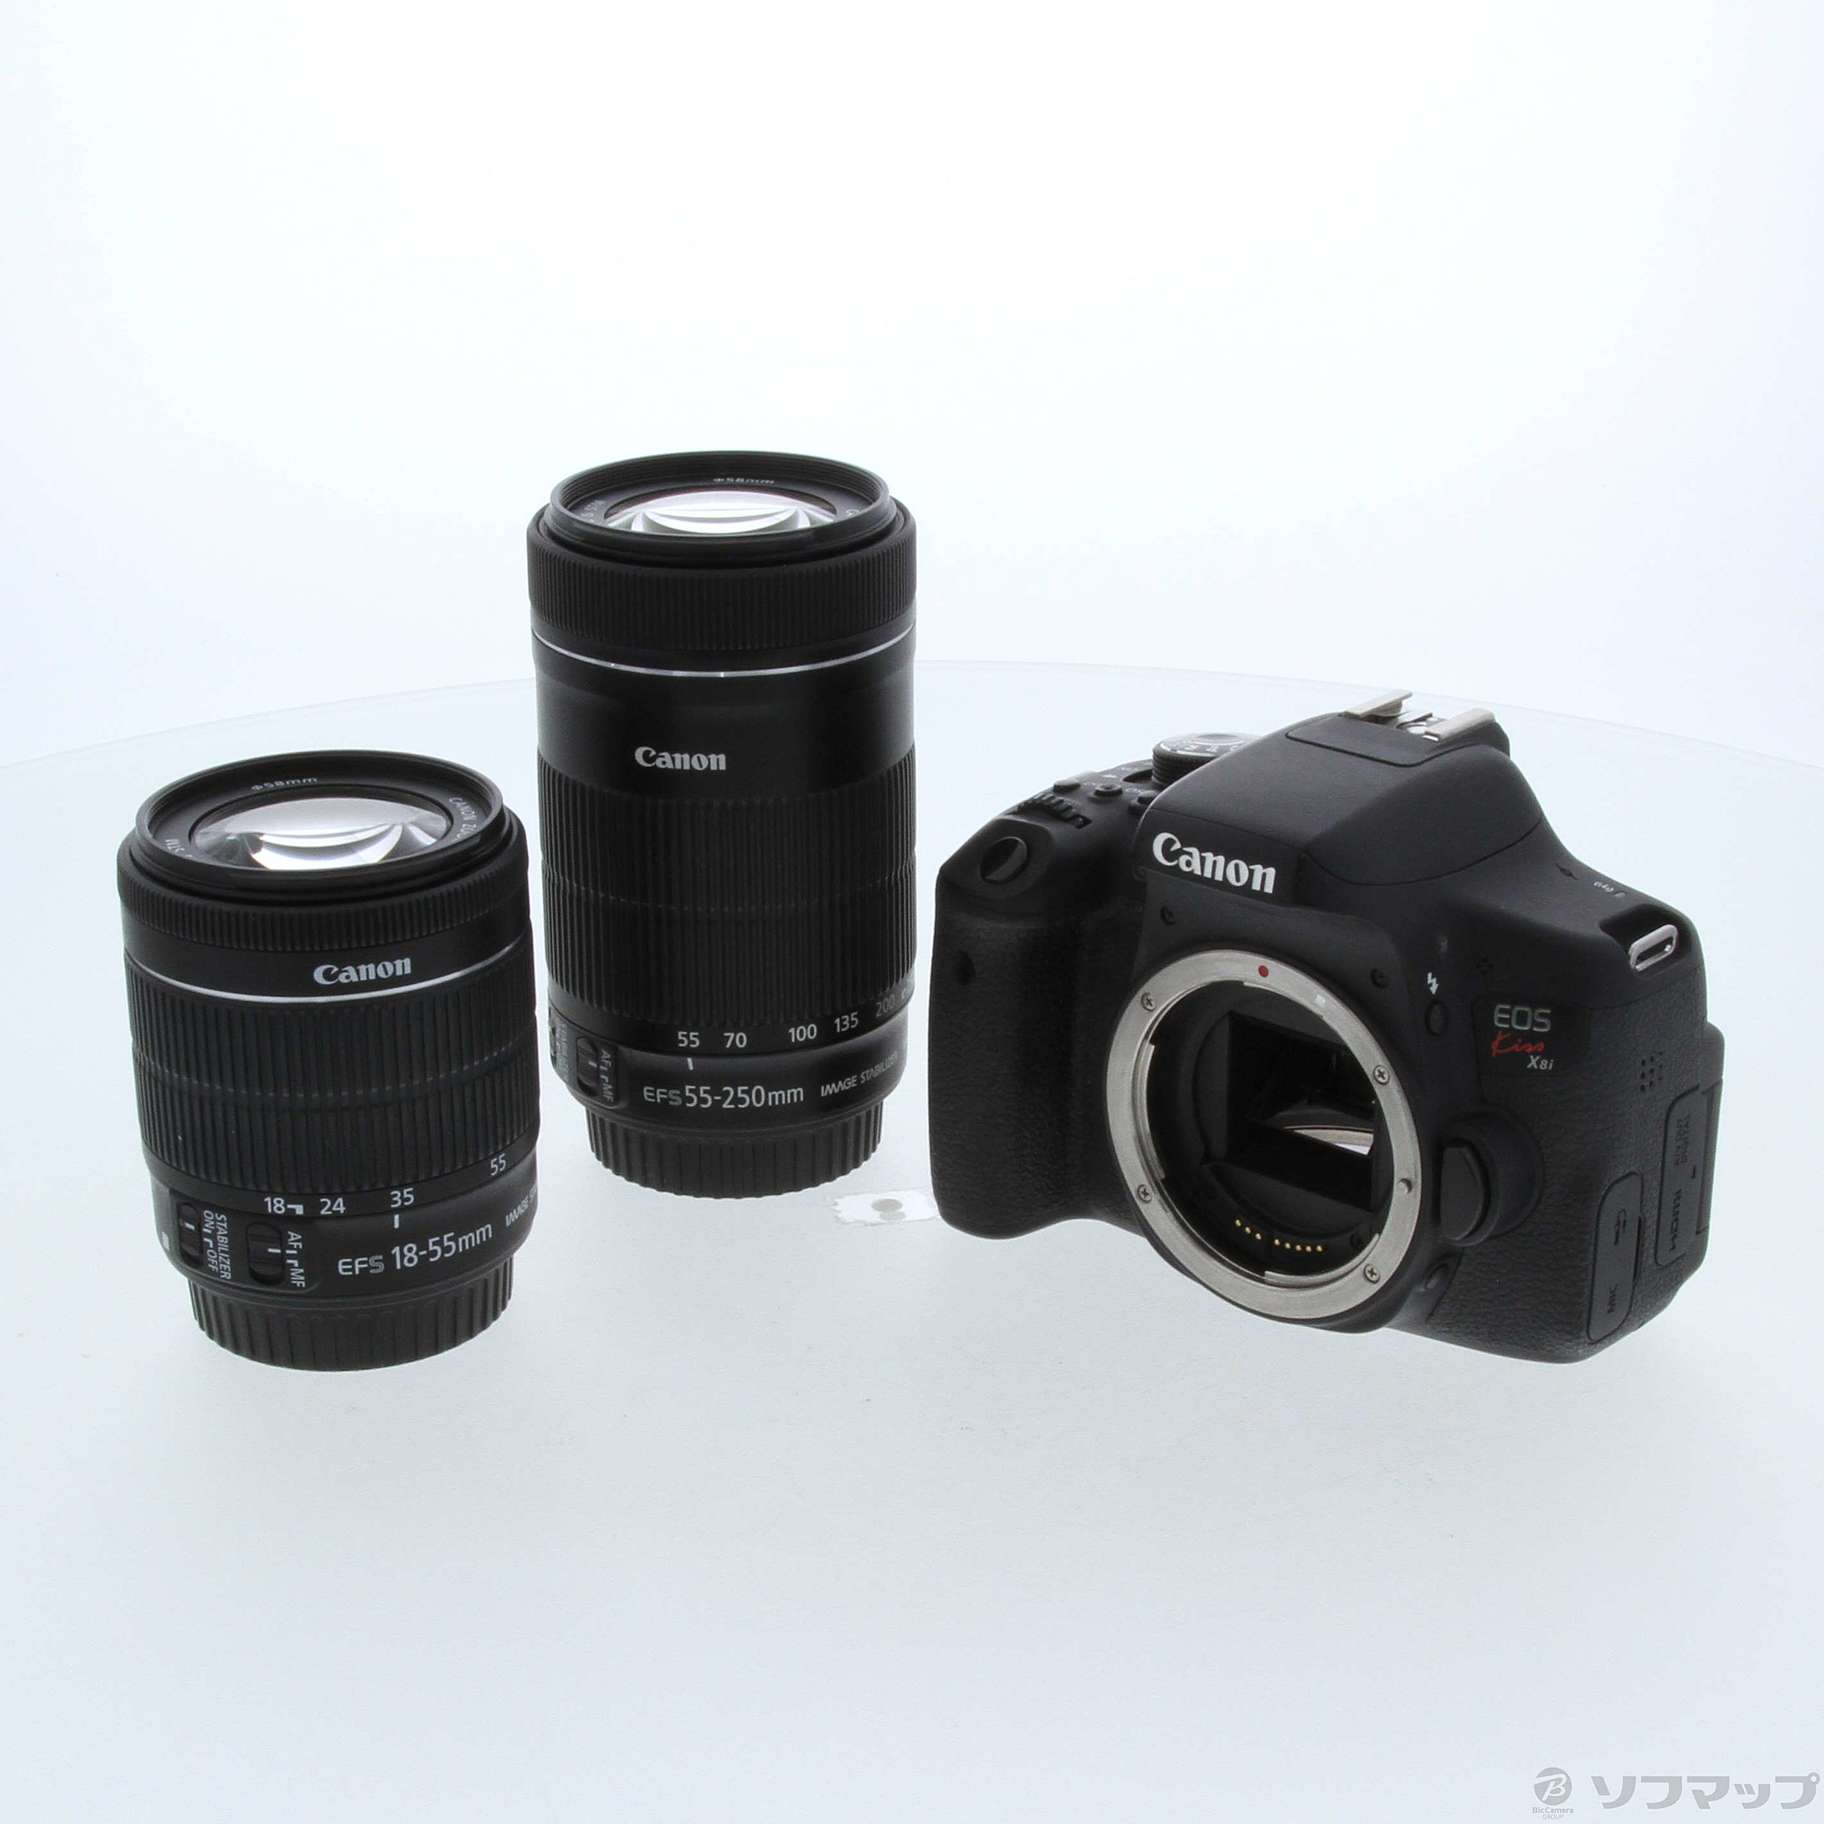 Canon EOS KISS X8i Wズームキットと広角ズーム